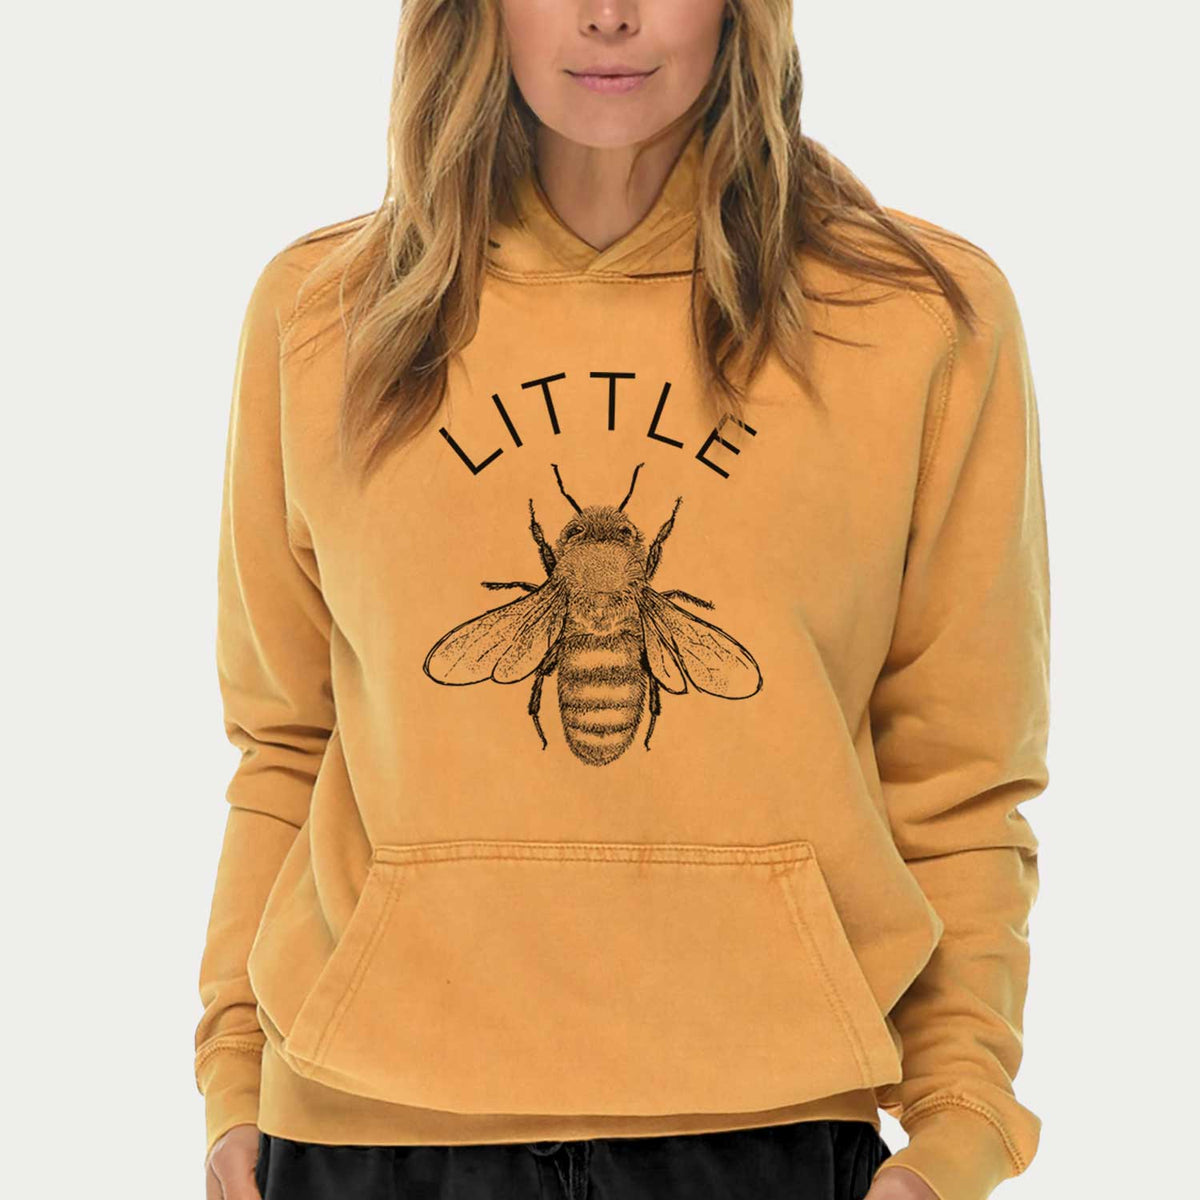 Little Bee  - Mid-Weight Unisex Vintage 100% Cotton Hoodie